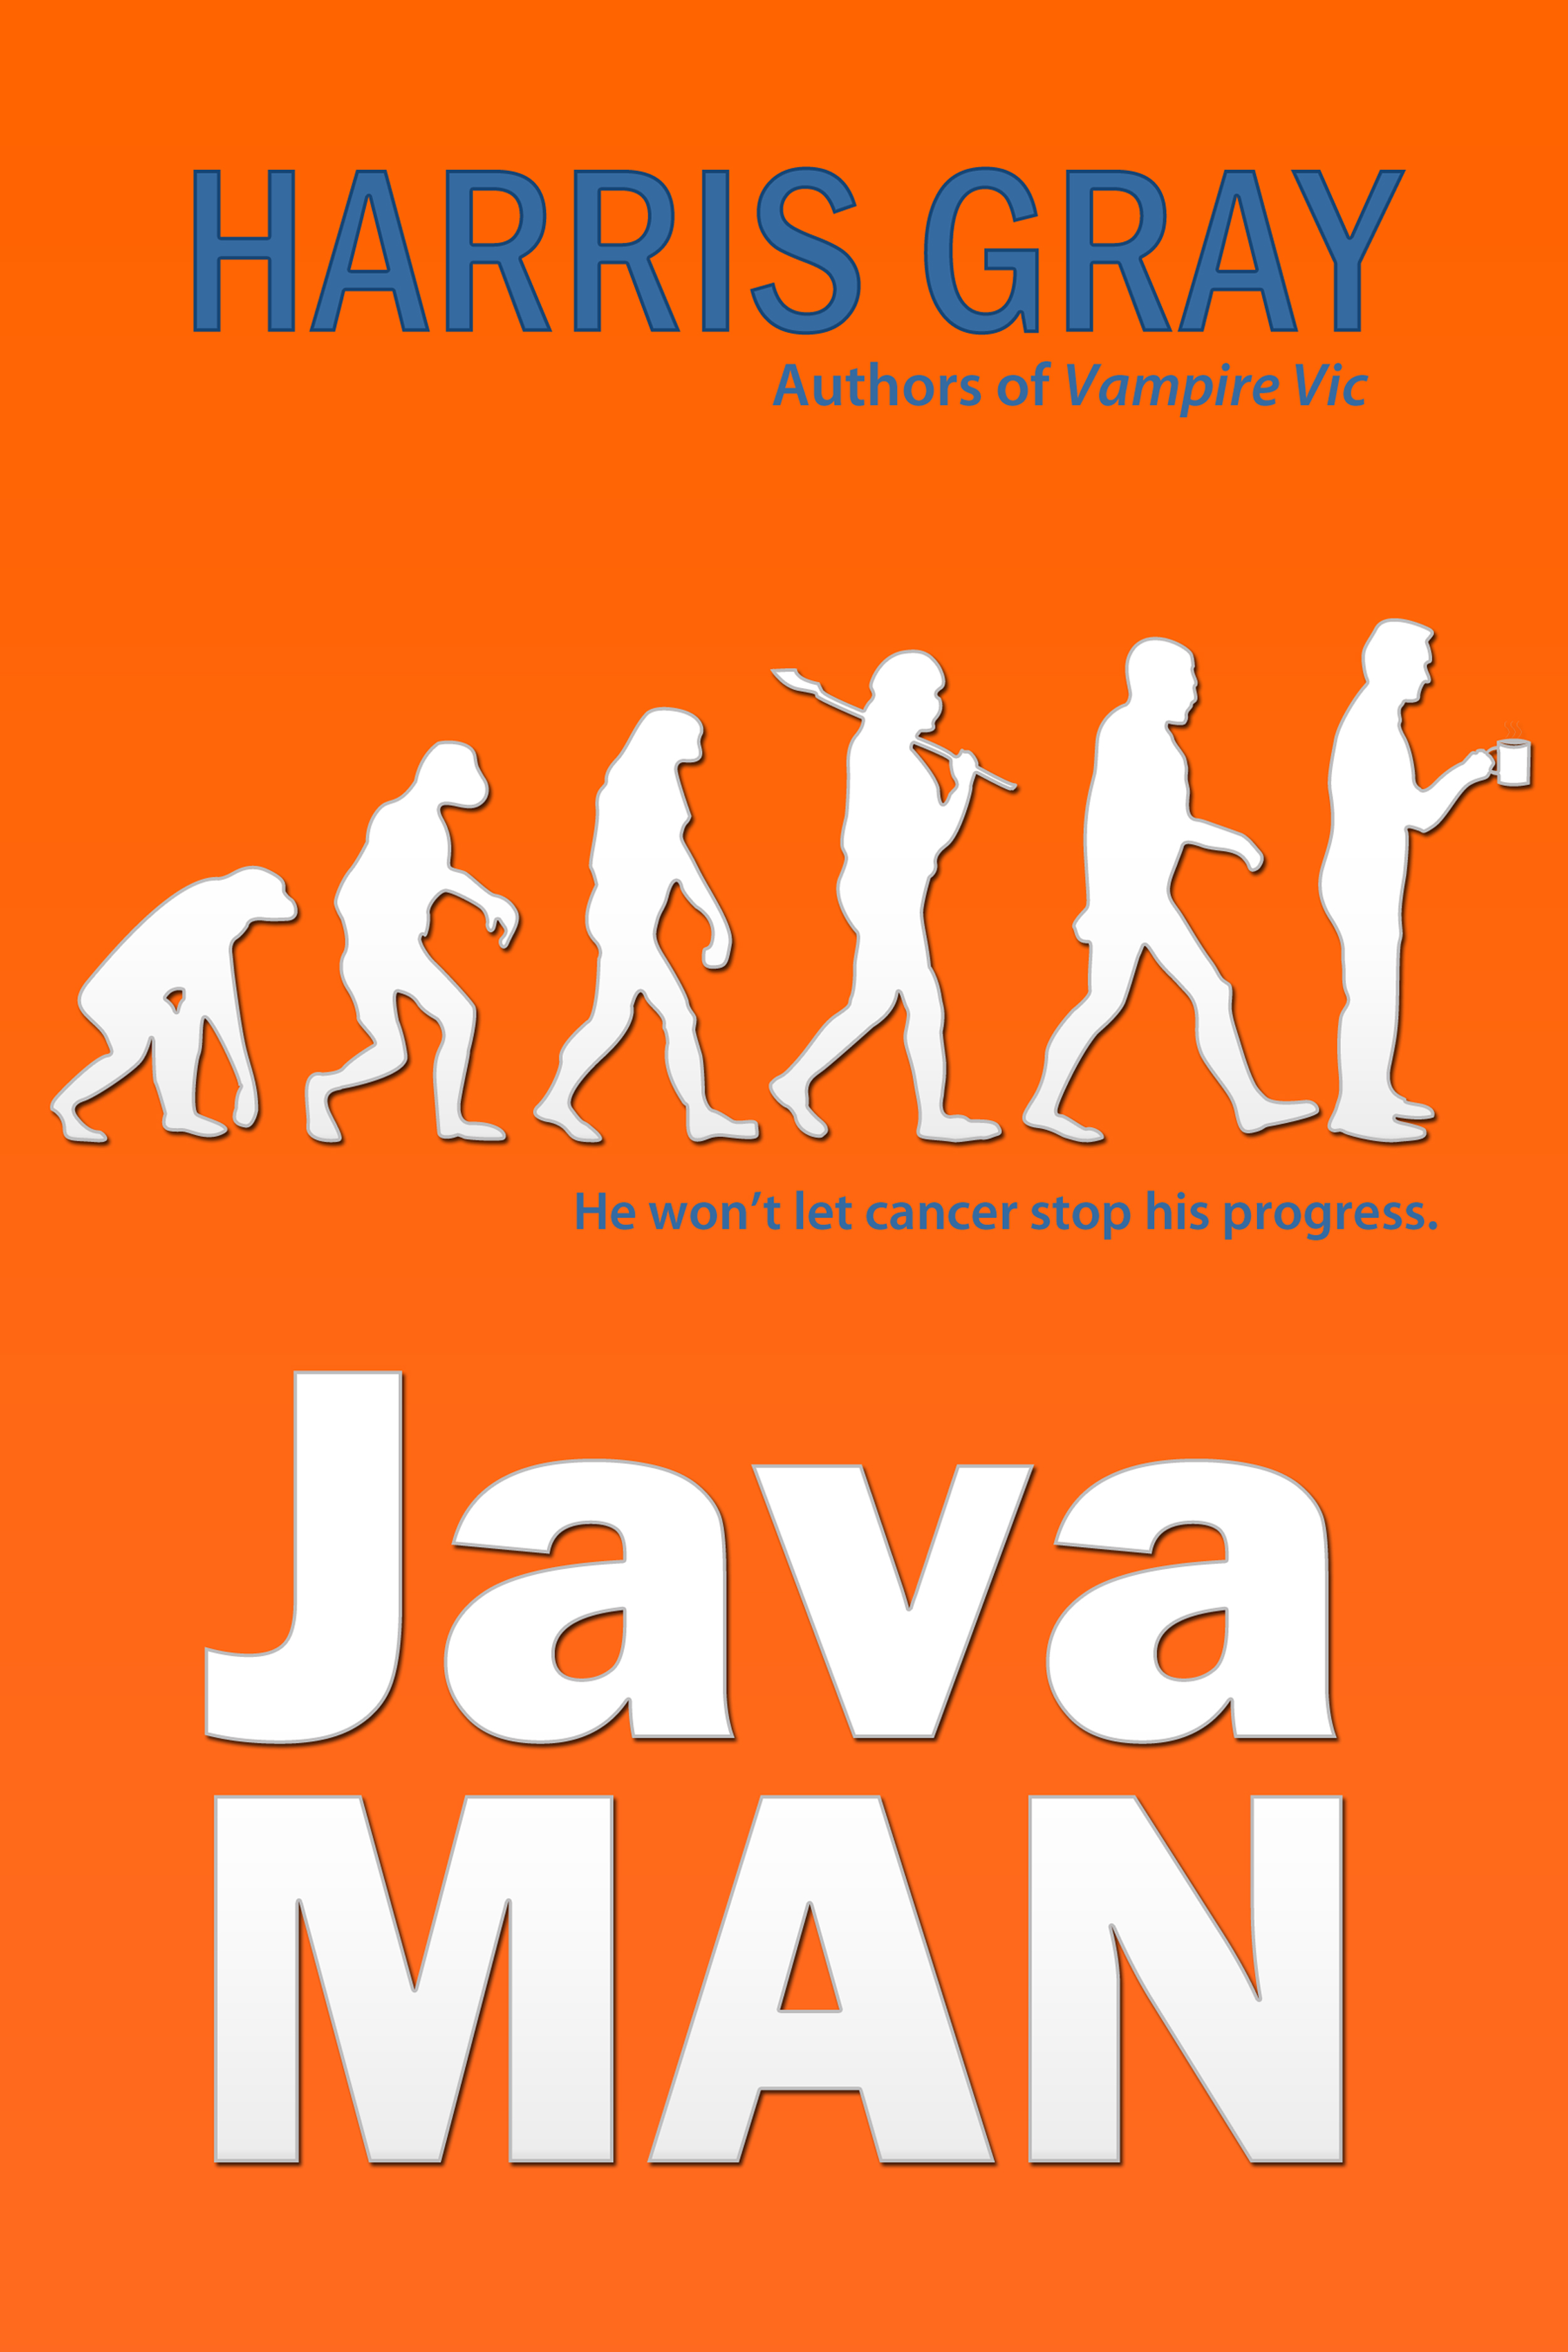 Java man